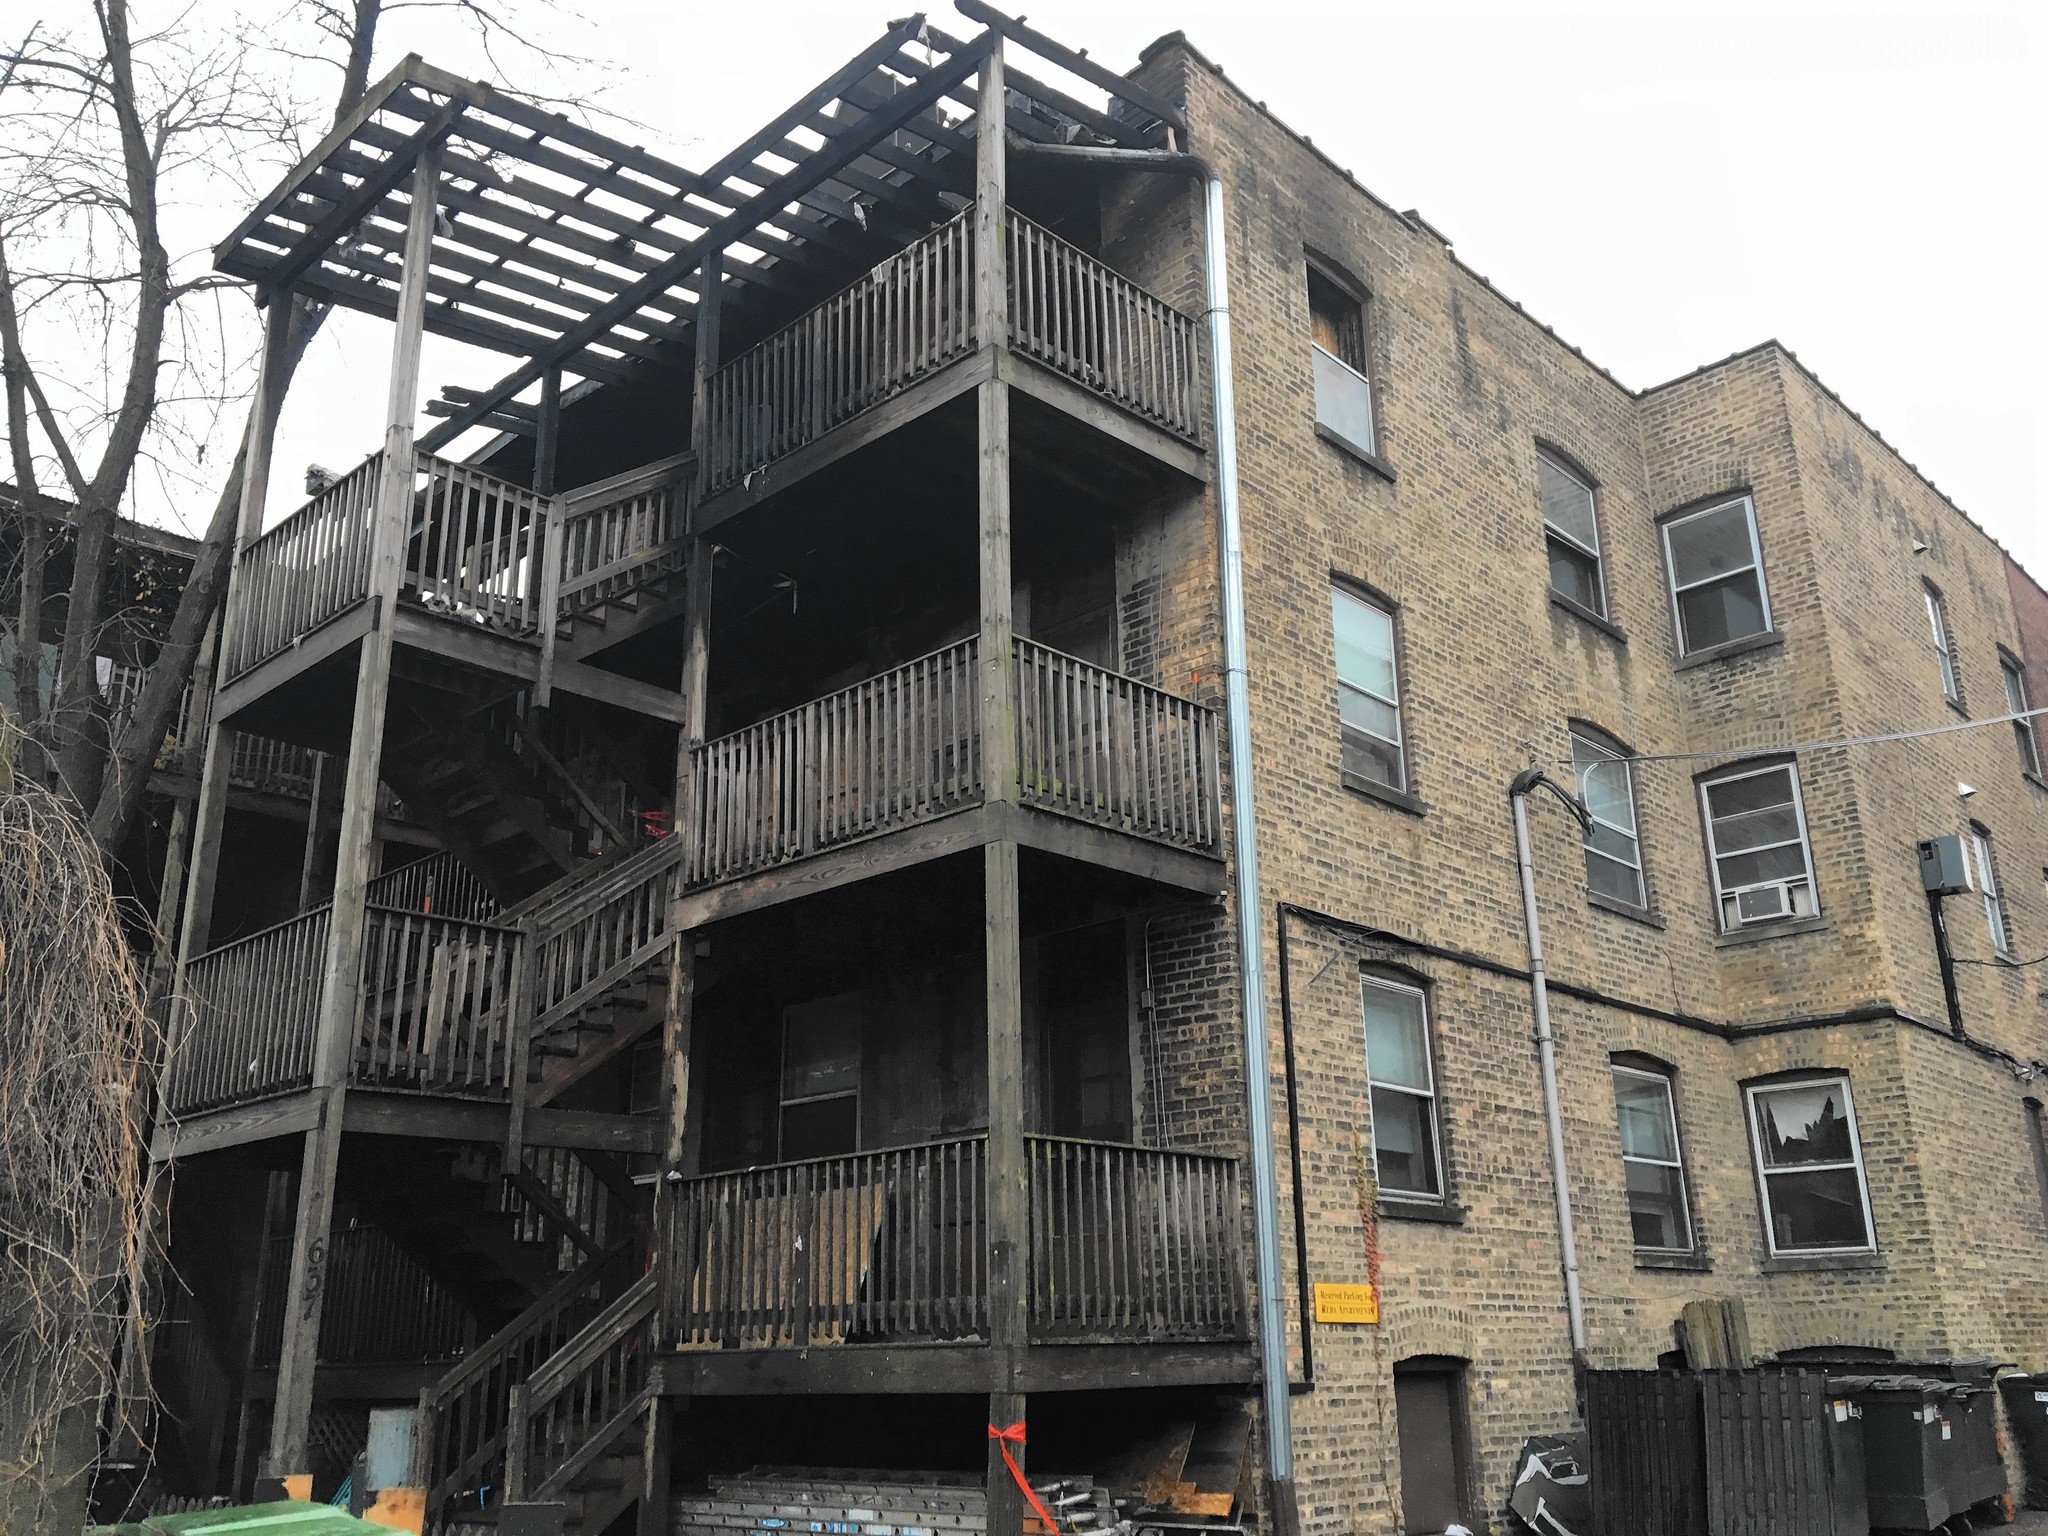 Eighteen displaced in Evanston apartment fire